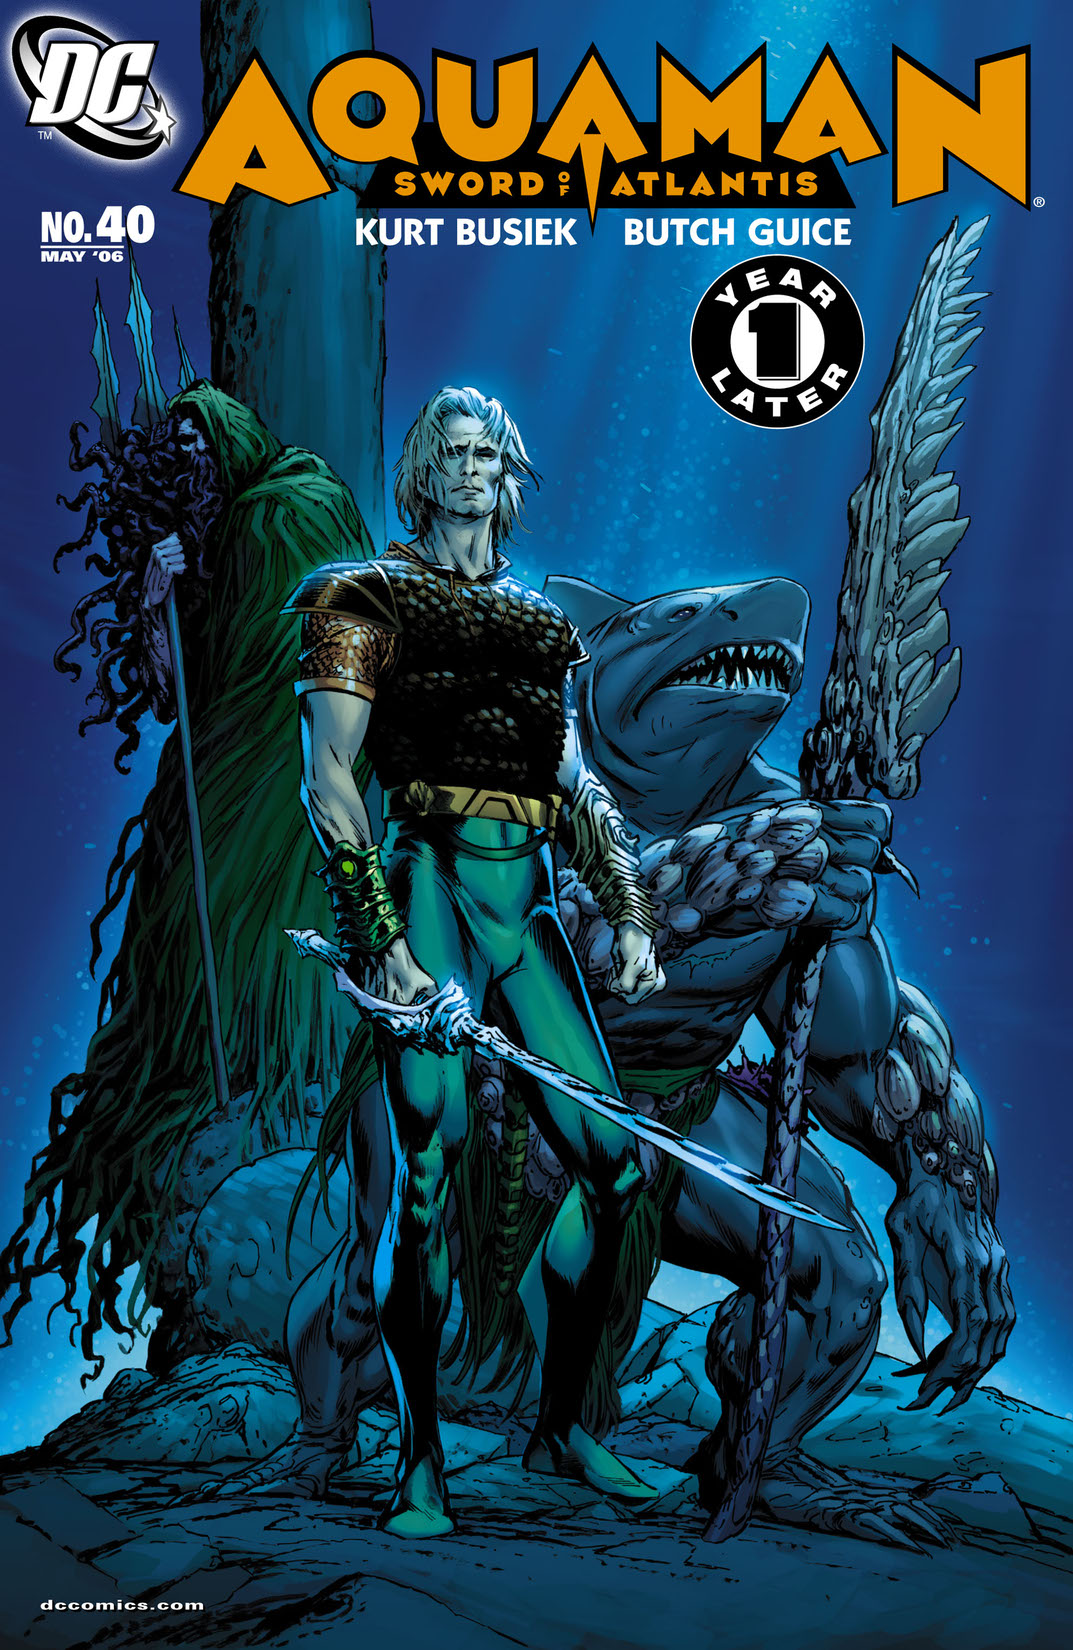 Aquaman: Sword of Atlantis #40 preview images